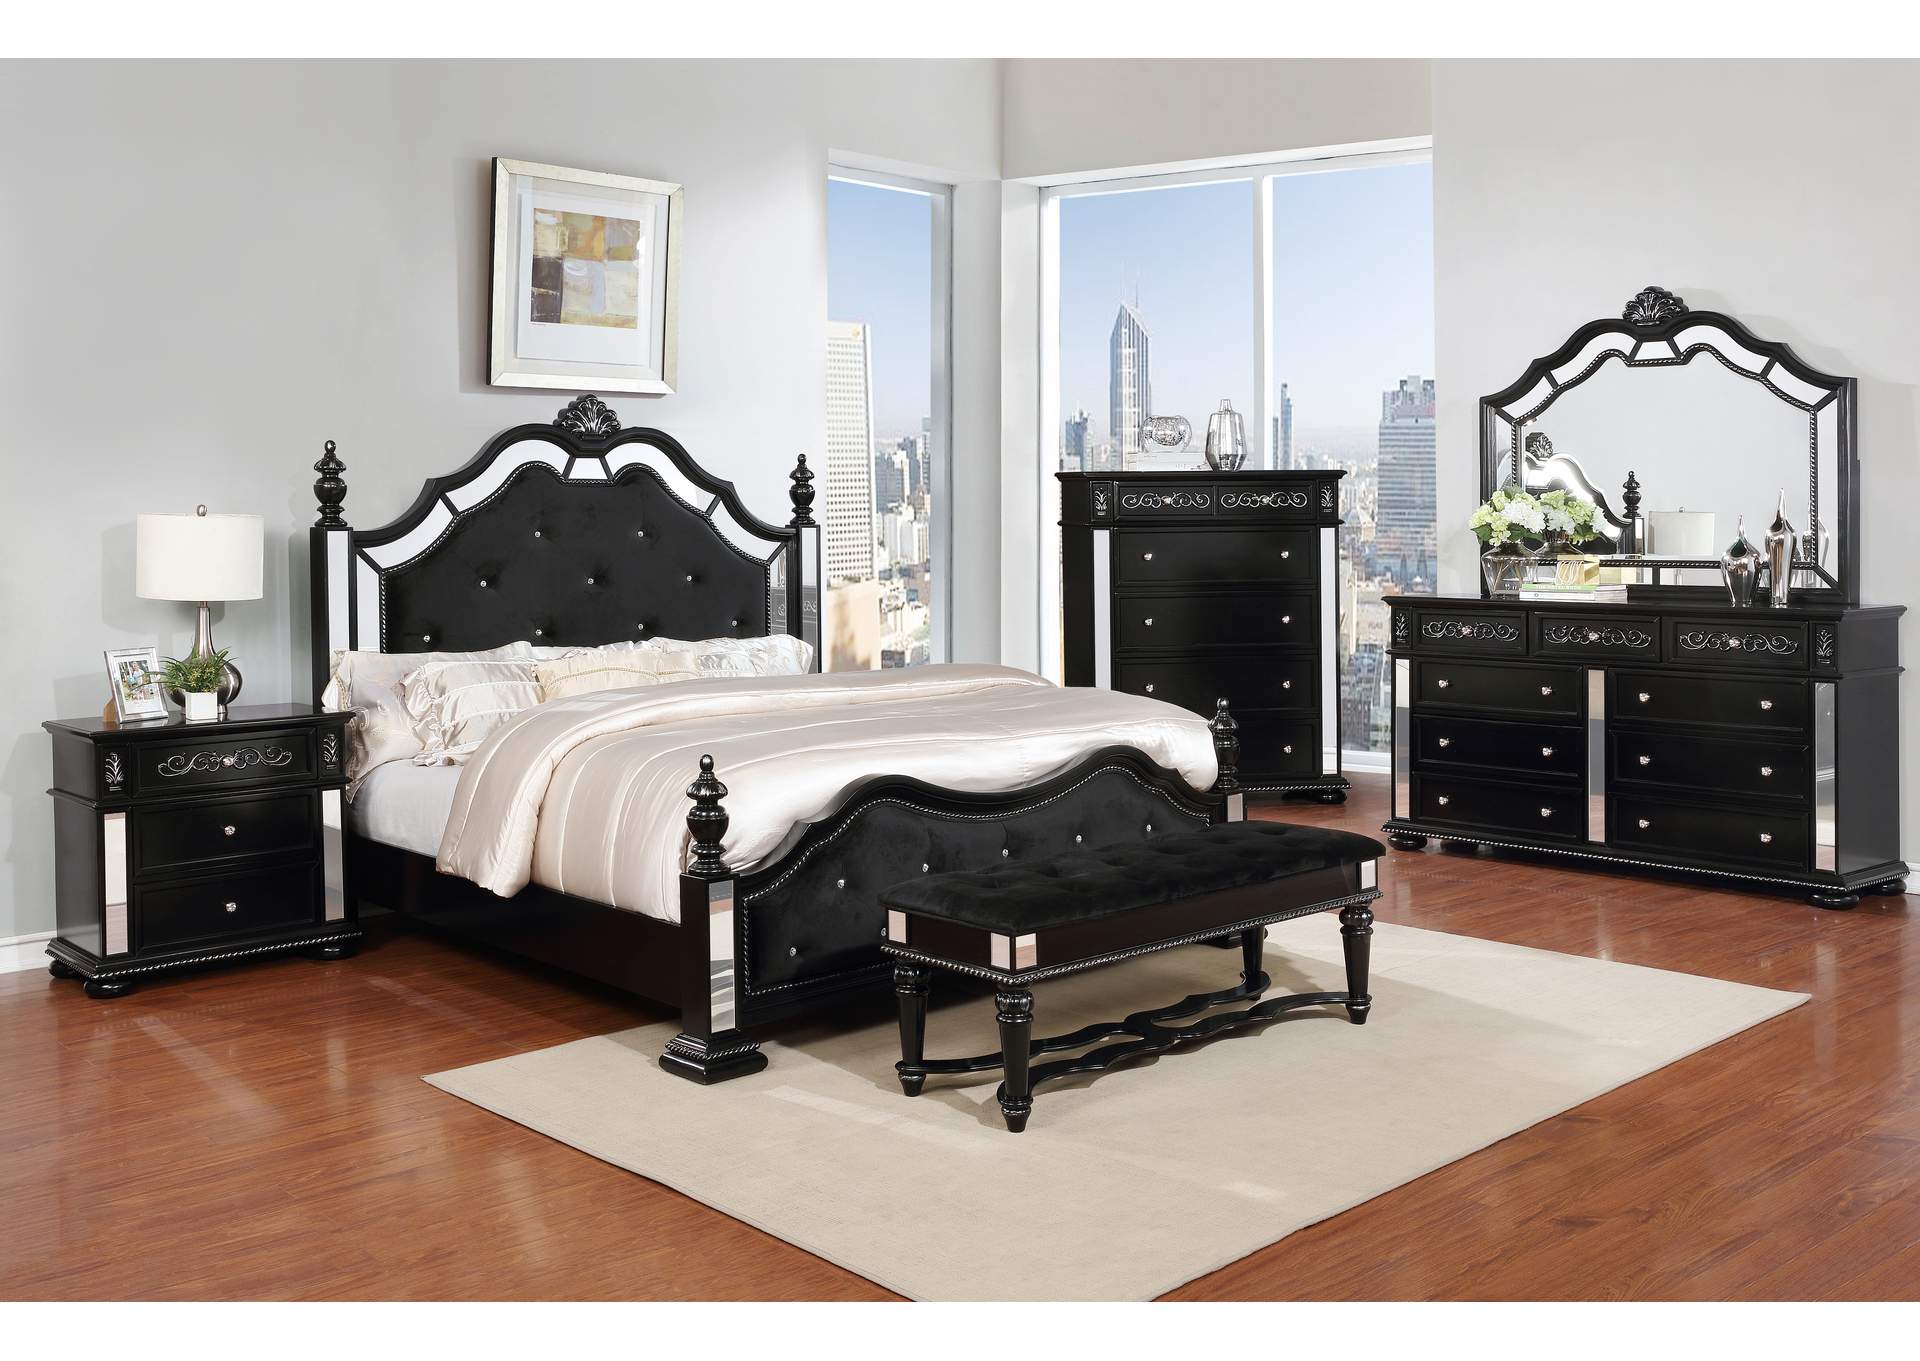 5 piece king bedroom set w/ nightstand, chest, dresser & mirror